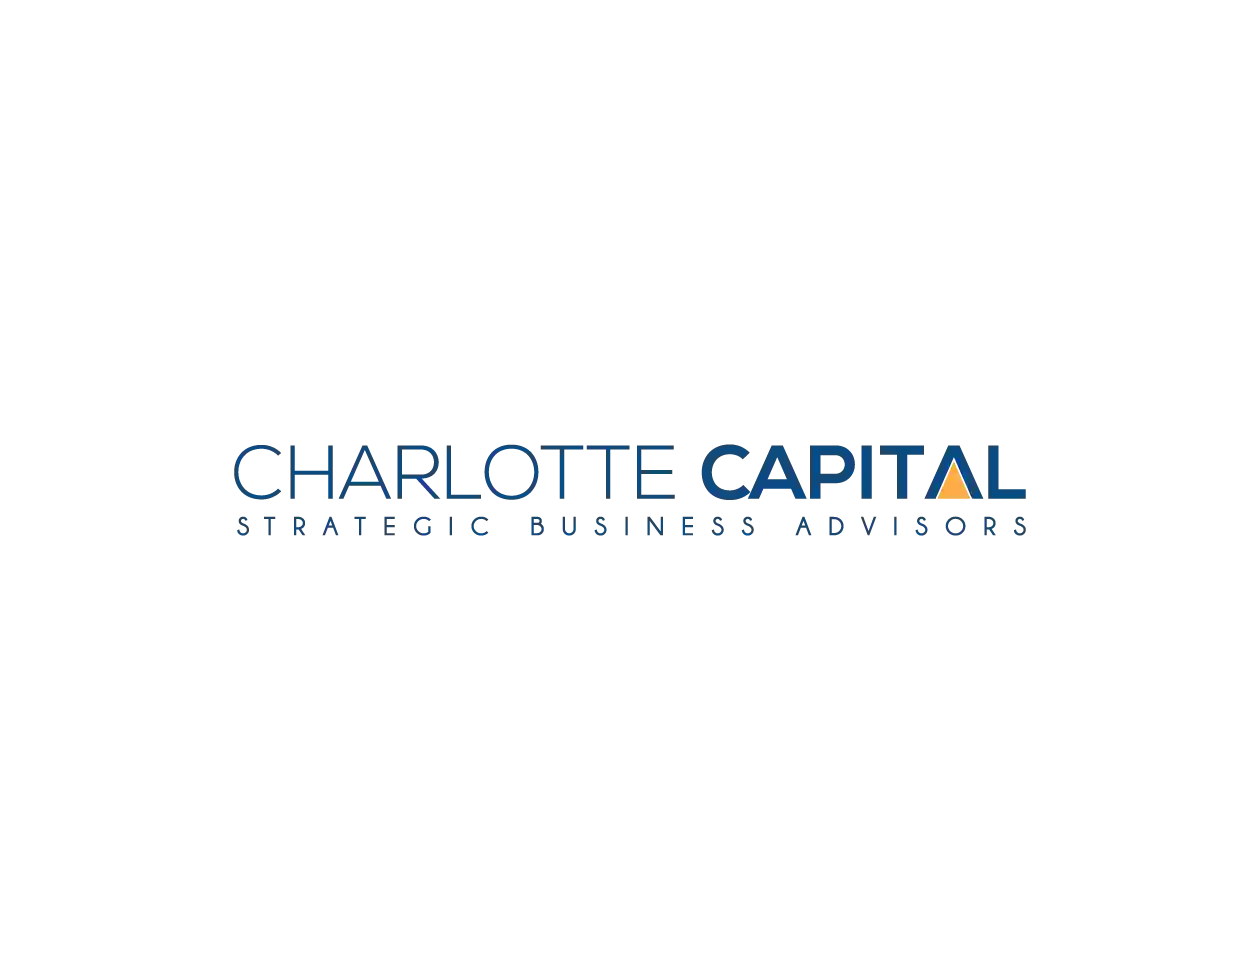 Charlotte Capital